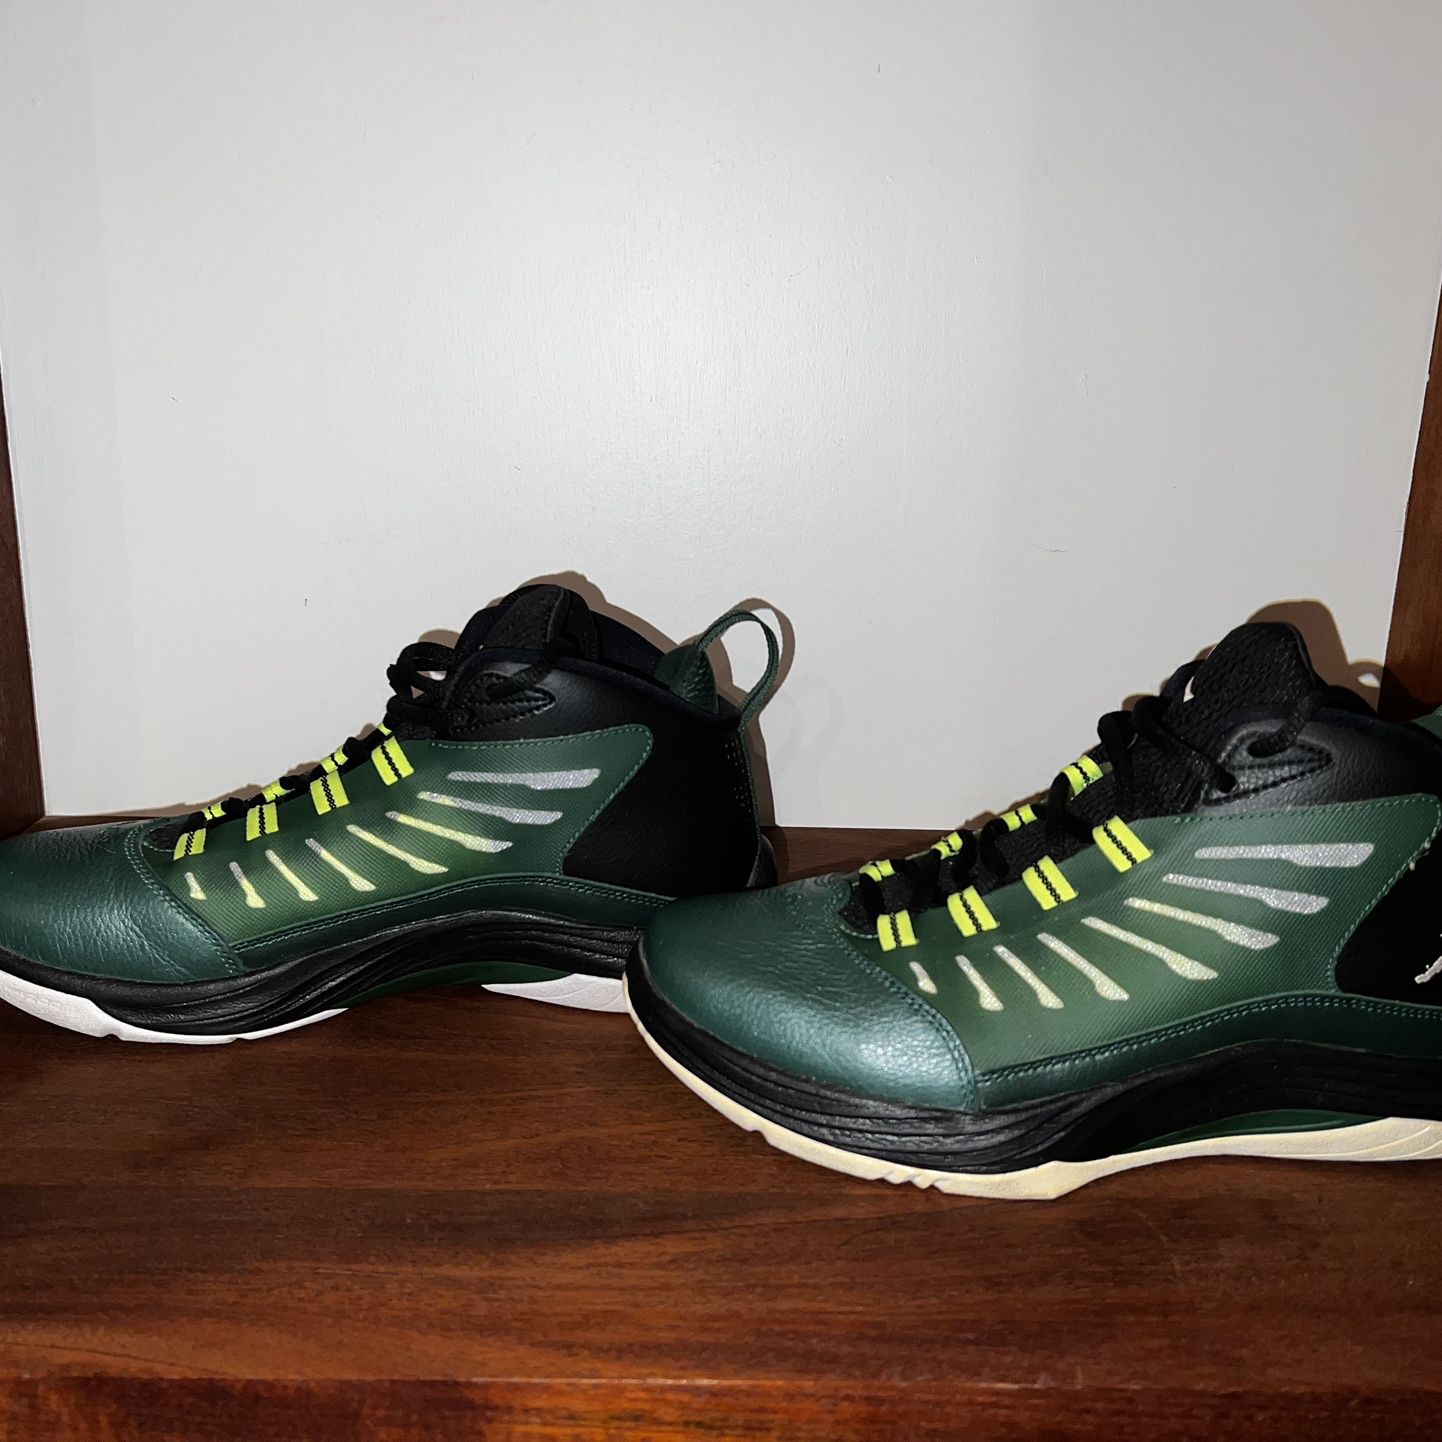 Air Jordan Nike Prime Fly 2 Gorge Green White Black Volt Size 8 (654287-301) - Men | Color: Green | Size: 8